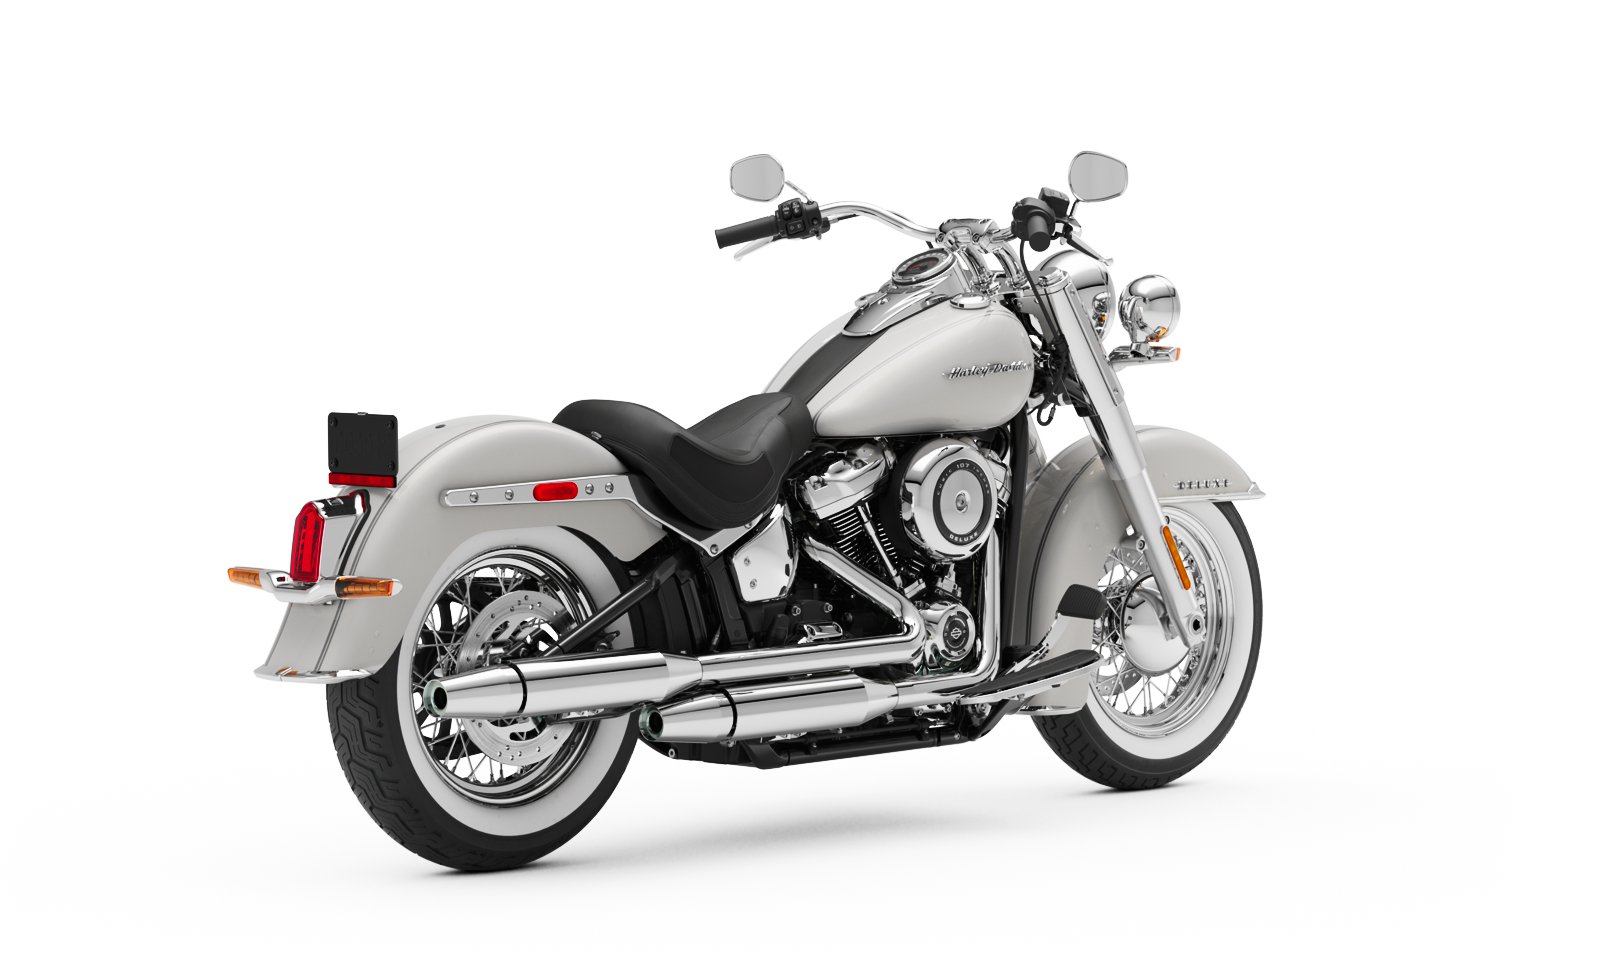 2020 Deluxe Motorcycle Harley Davidson Belgie